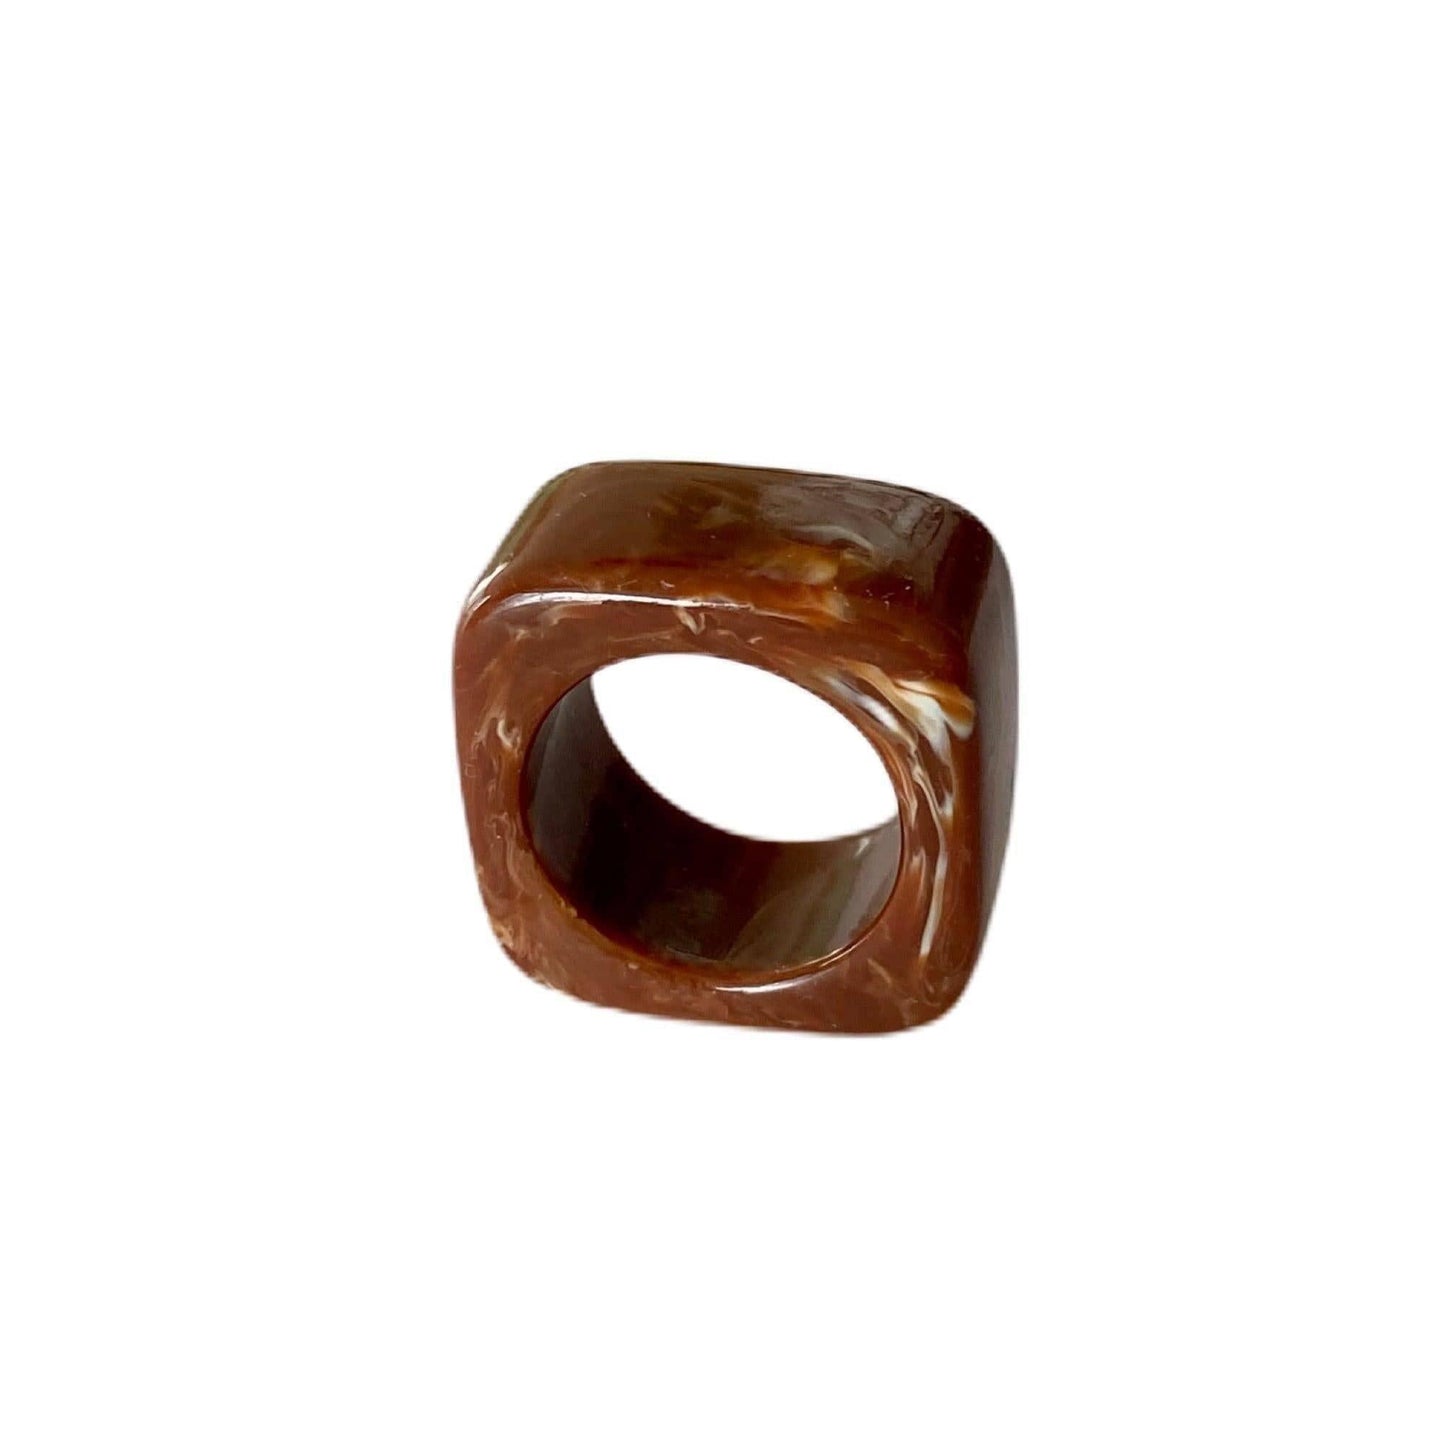 Vintage Plastic Ring Brown Marble Design Square